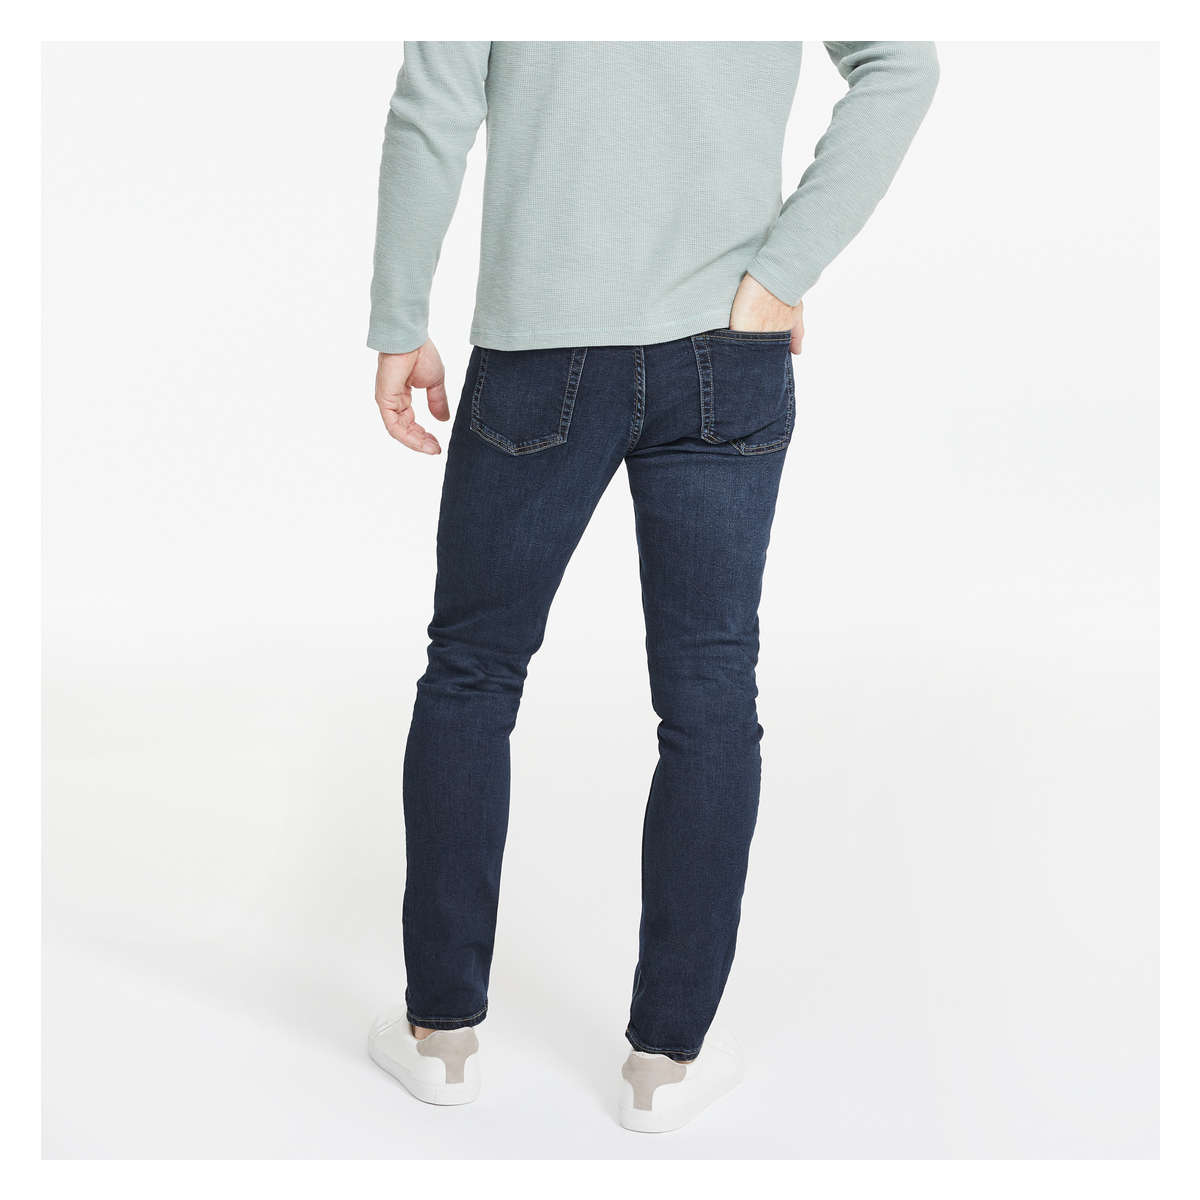 Men's Medium Wash Slim-Fit Jeans in Dark Wash from Joe Fresh